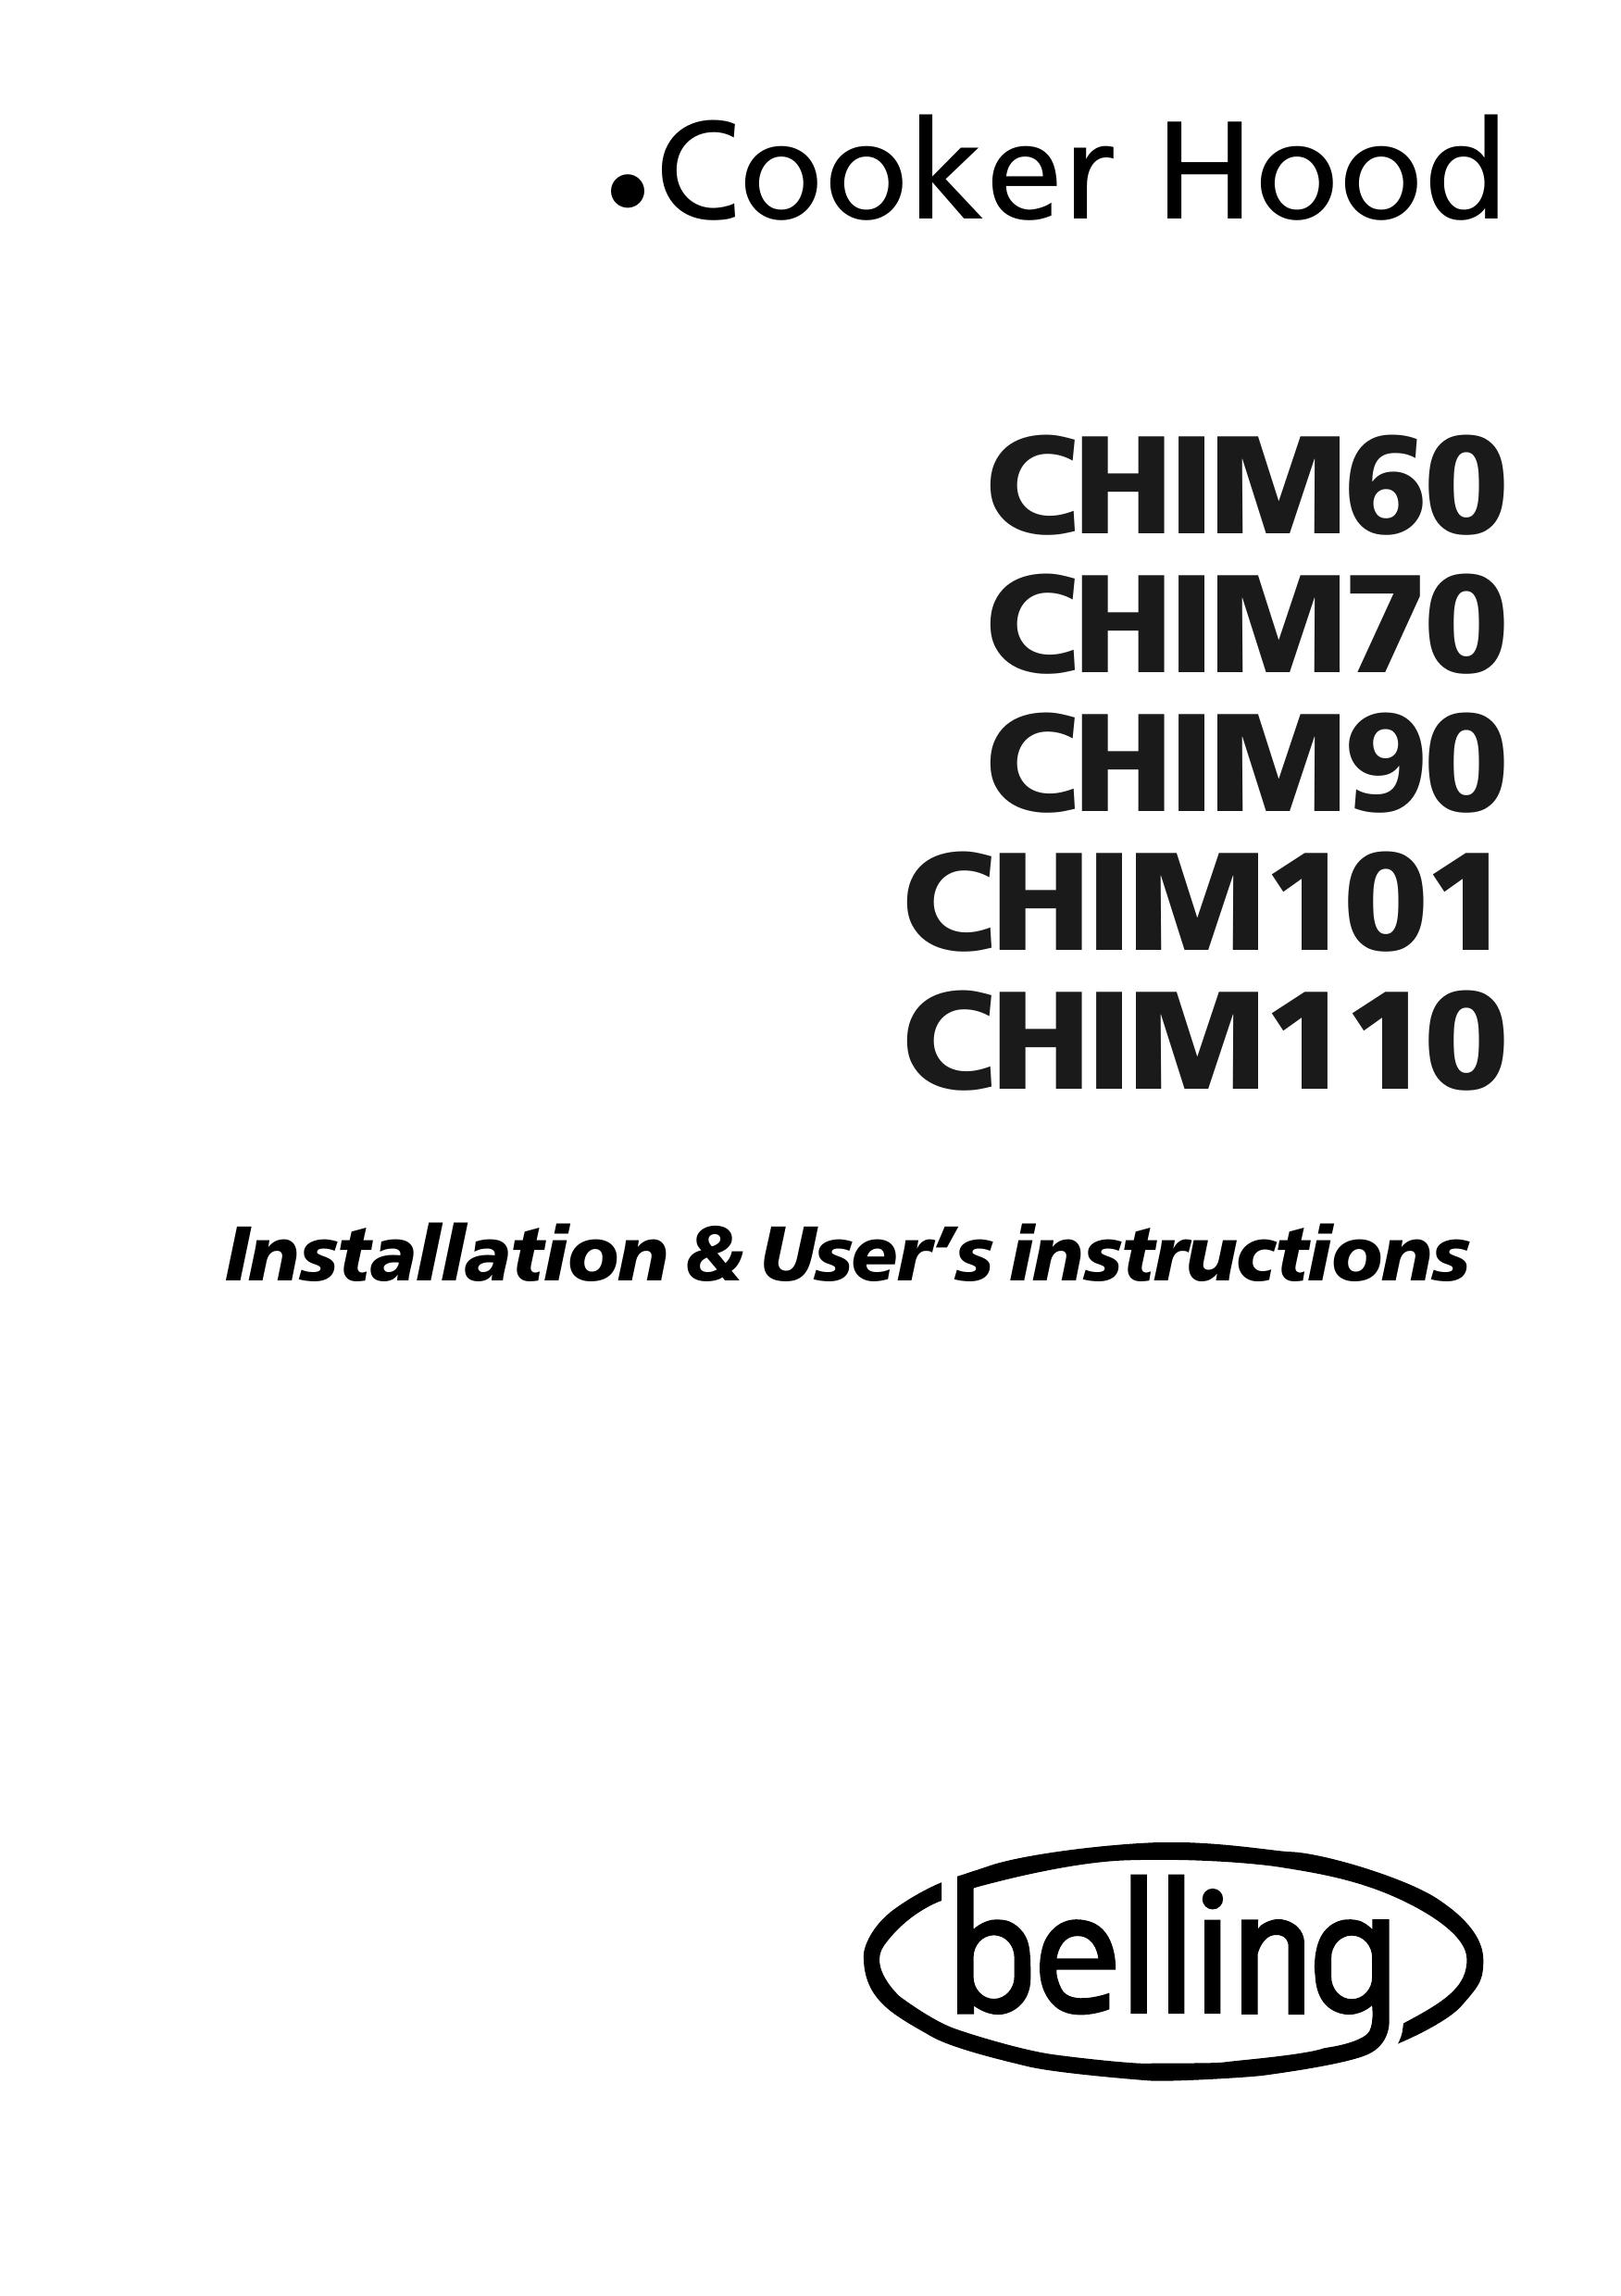 Glen Dimplex Home Appliances Ltd CHIM60 Ventilation Hood User Manual